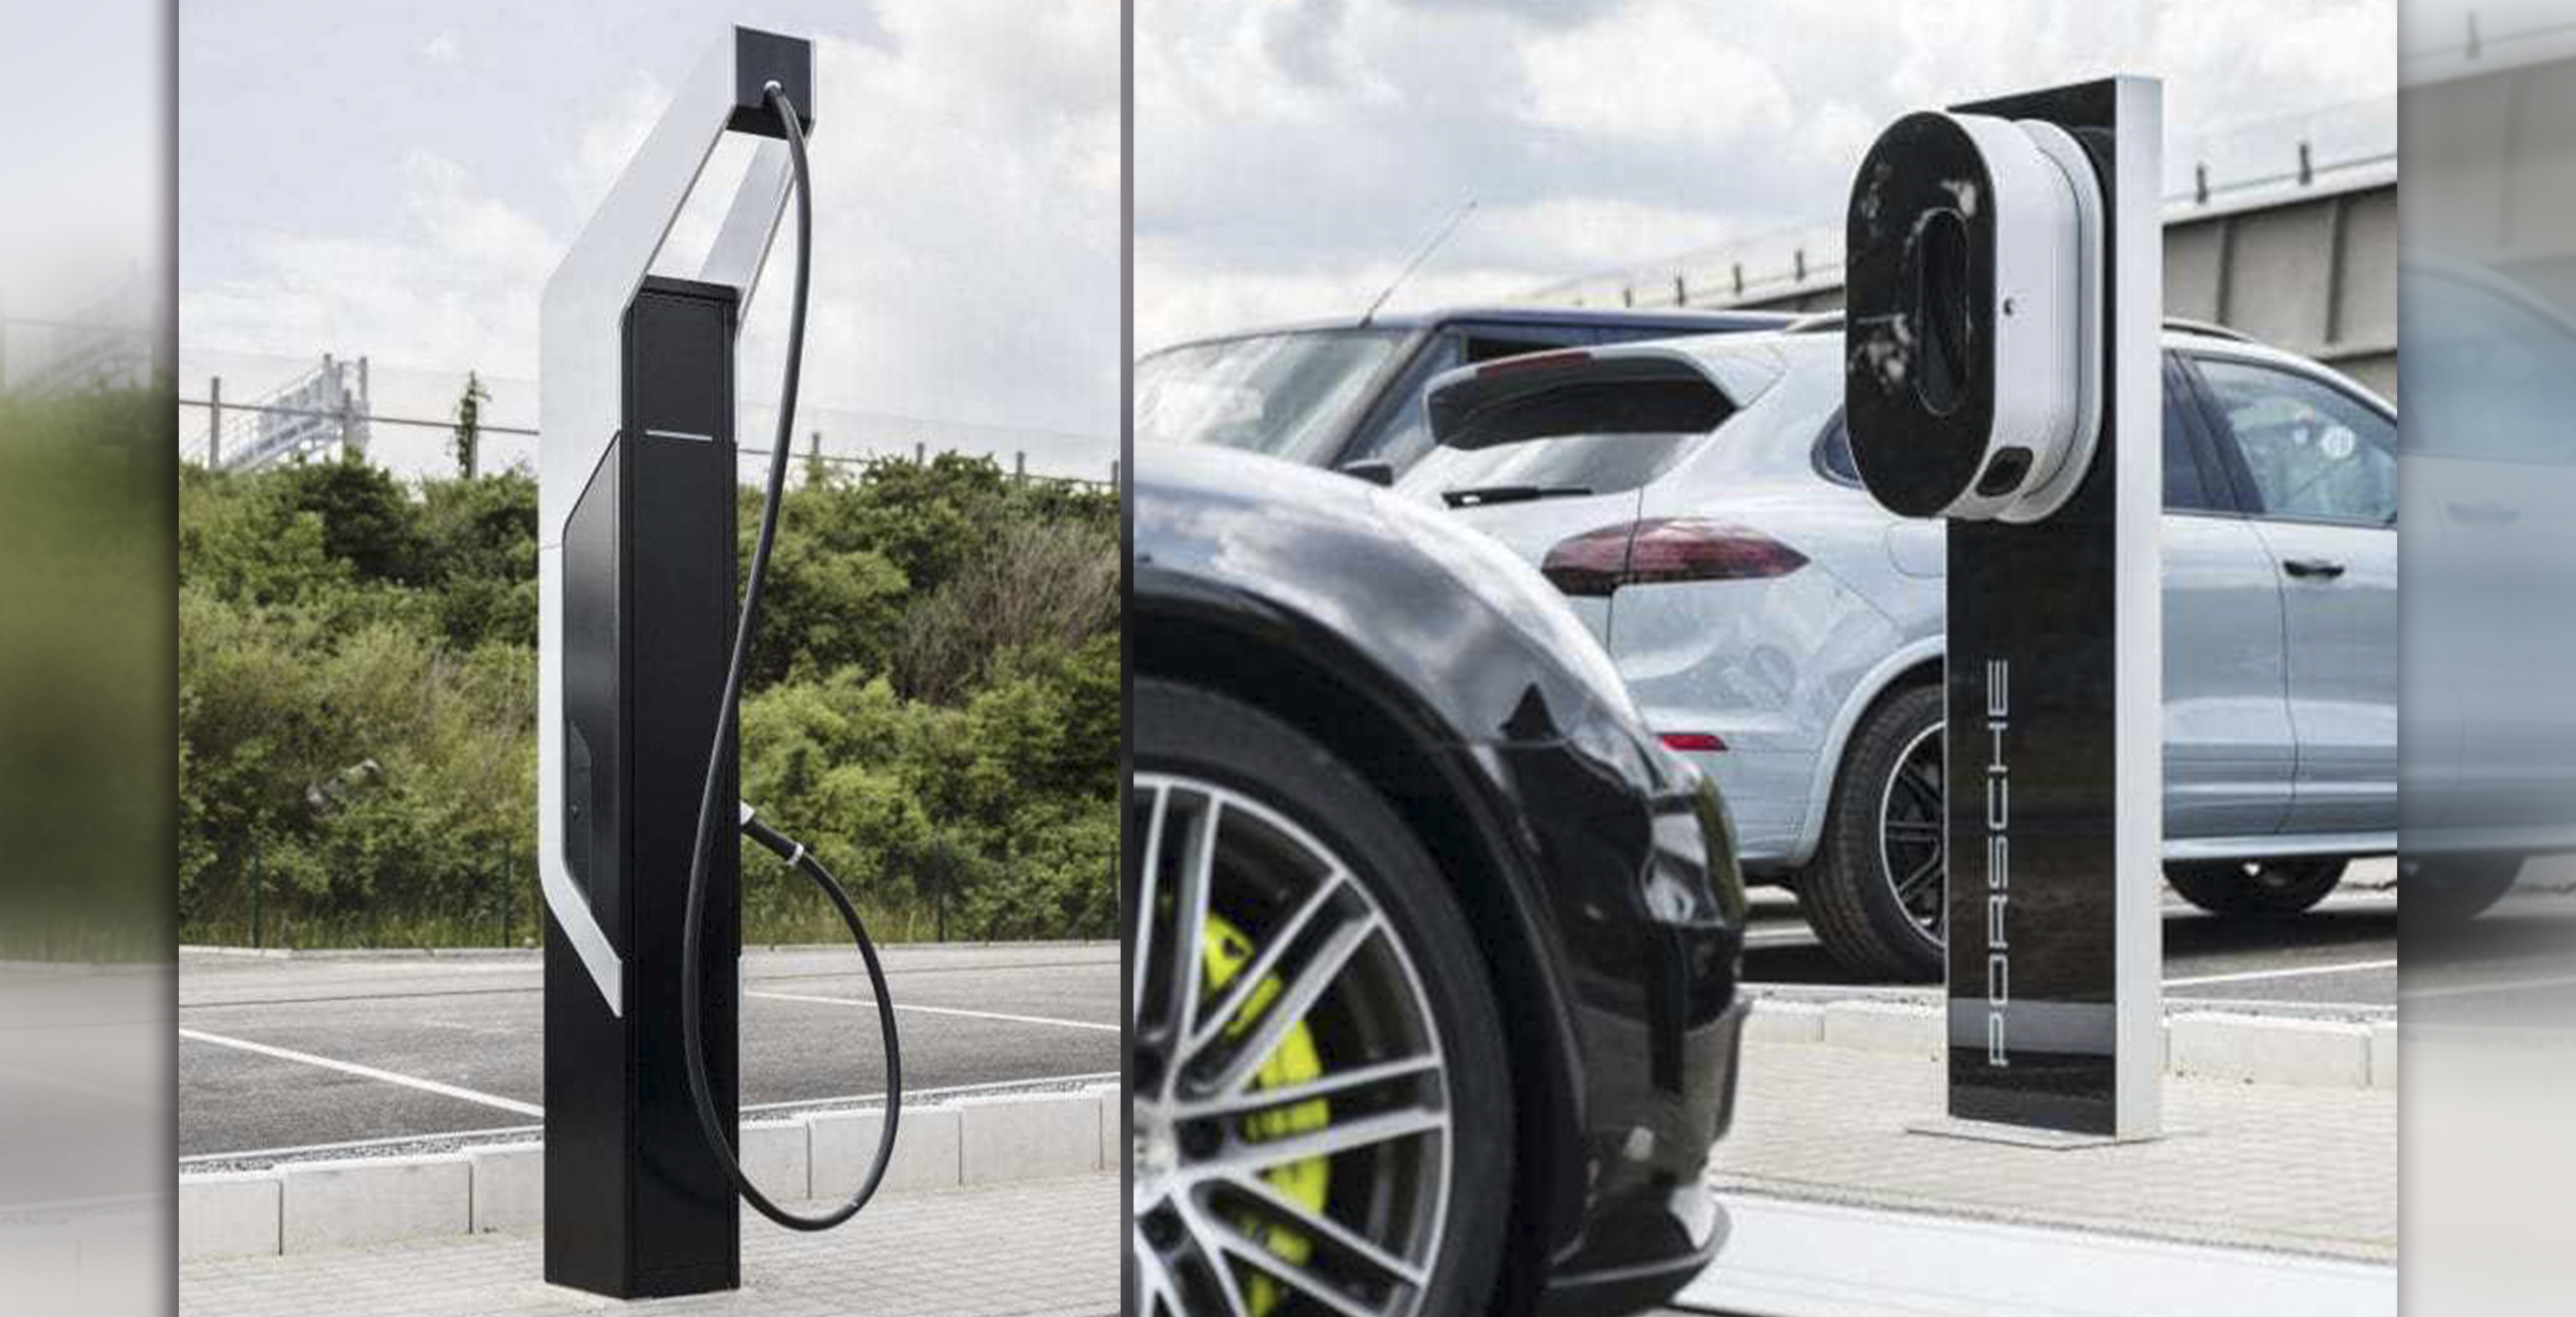 https://www.cifrasonline.com.ar/wp-content/uploads/2019/03/Porsche-estrena-su-primera-estacion-de-carga-ultrarrapida-para-vehiculos-electricos.jpg